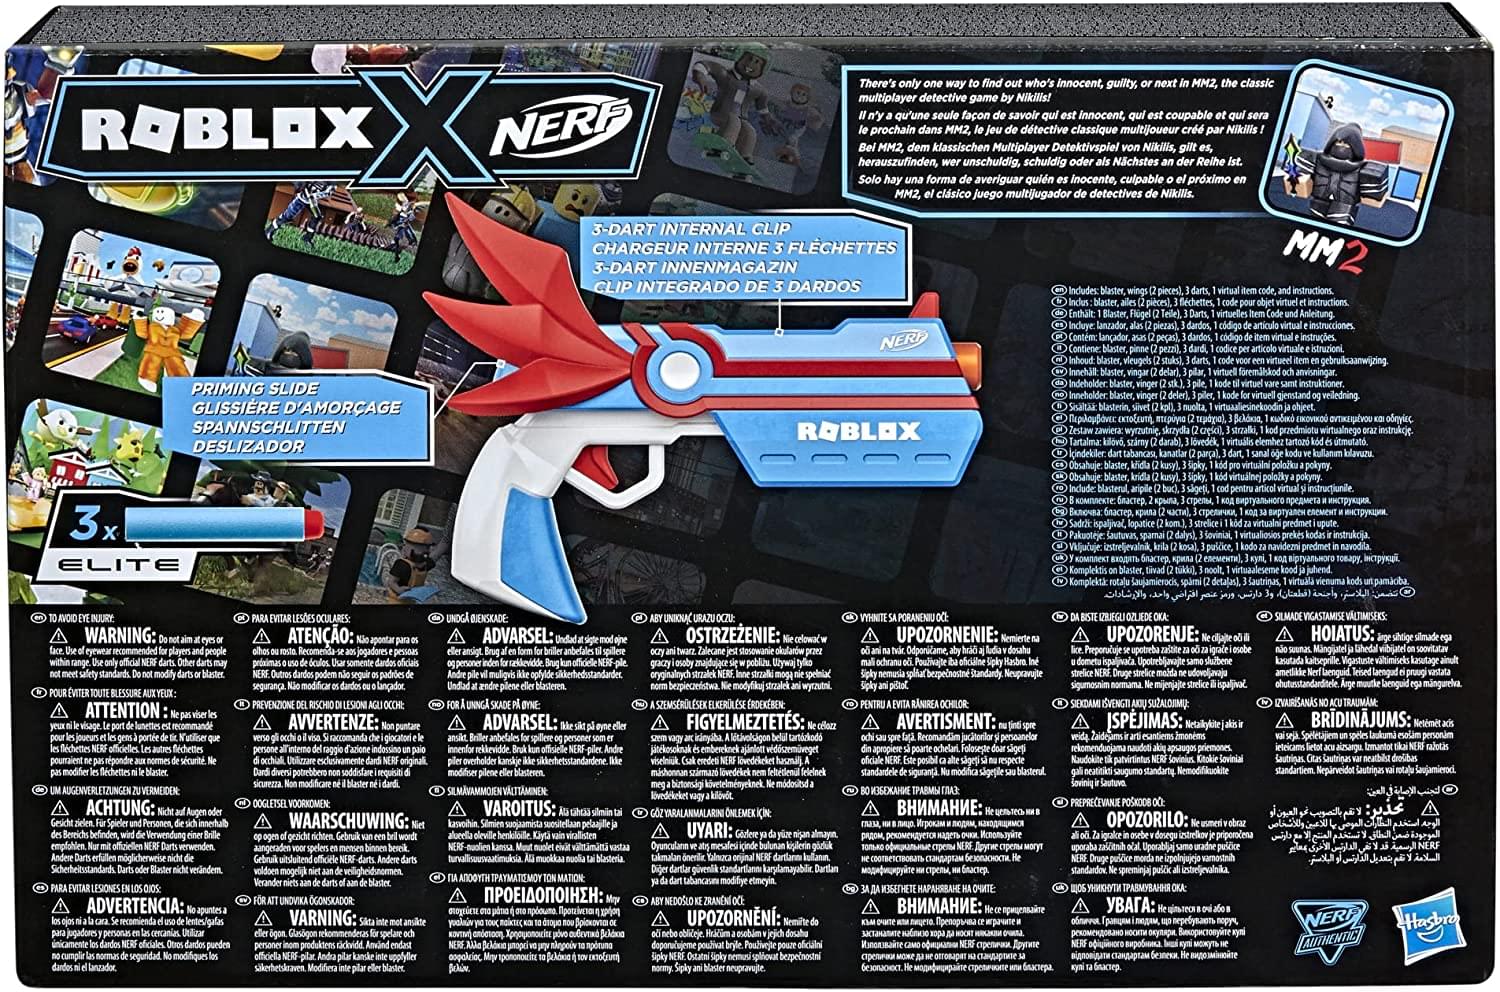 Nerf Roblox MM2: DartBringer Blaster ( NEW 2022 ) Includes Code